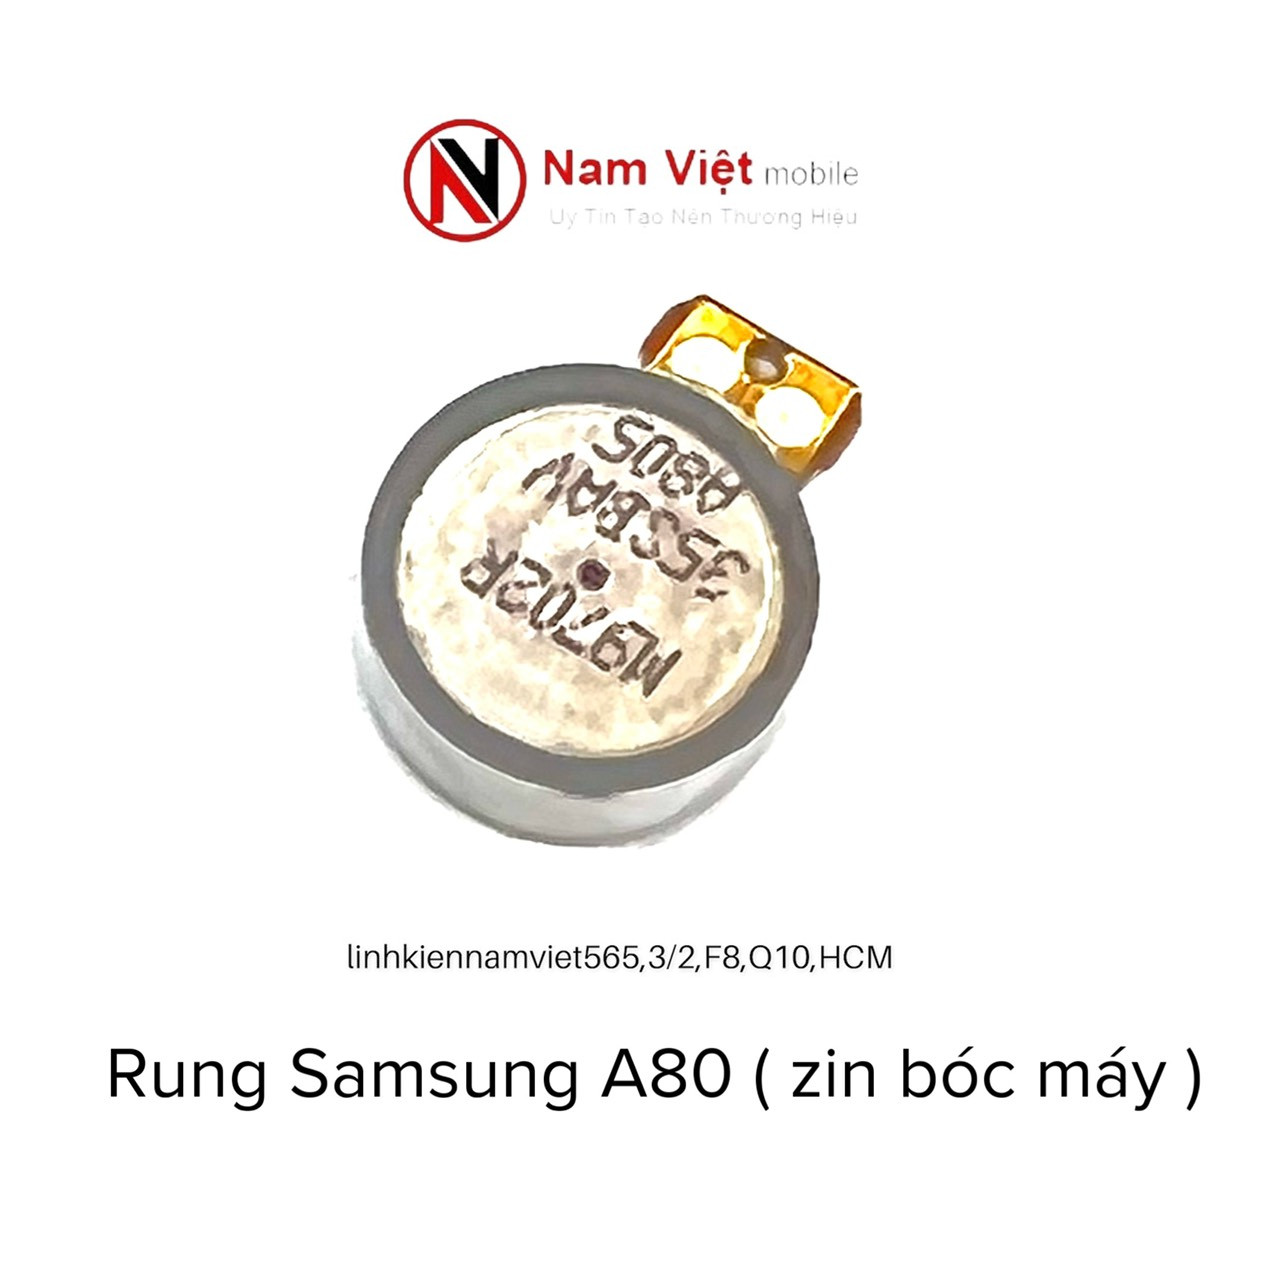 Rung Samsung A80